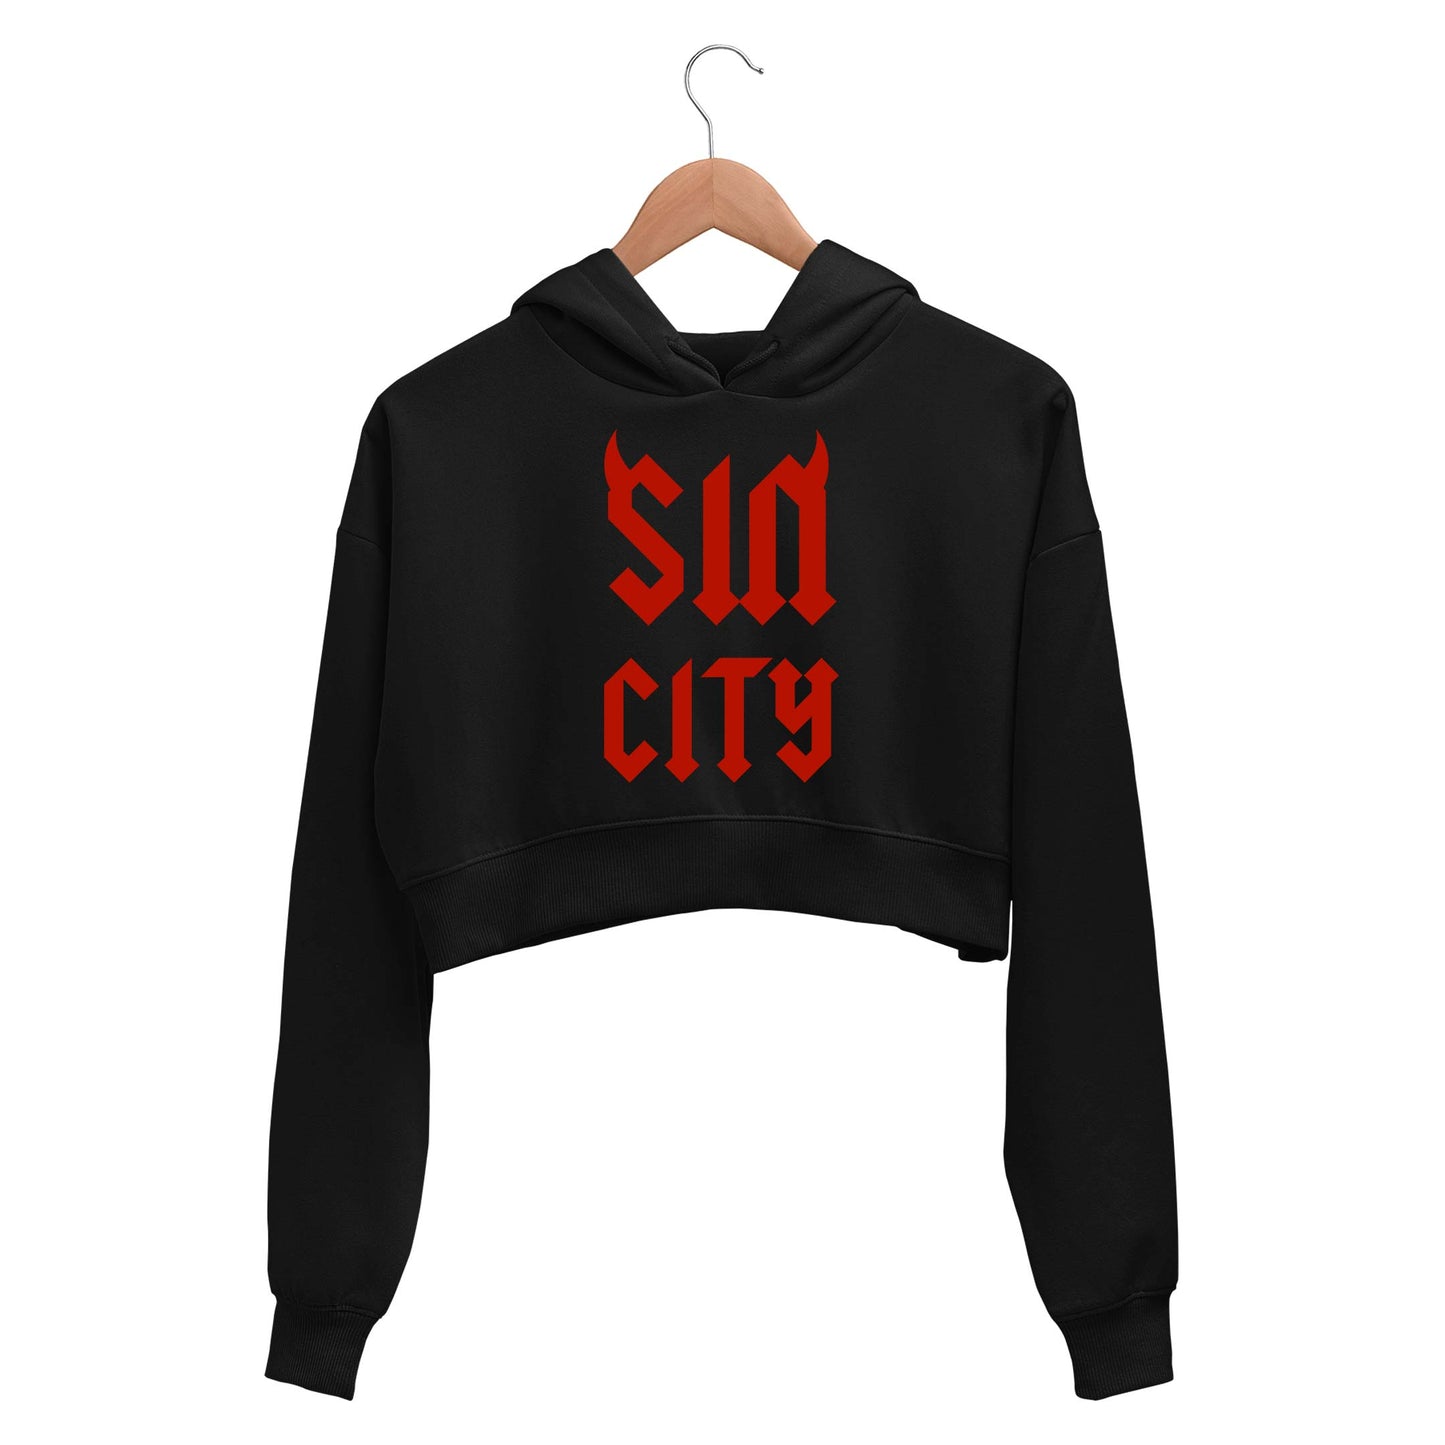 ac/dc sin city crop hoodie hooded sweatshirt upper winterwear music band buy online india the banyan tee tbt men women girls boys unisex black